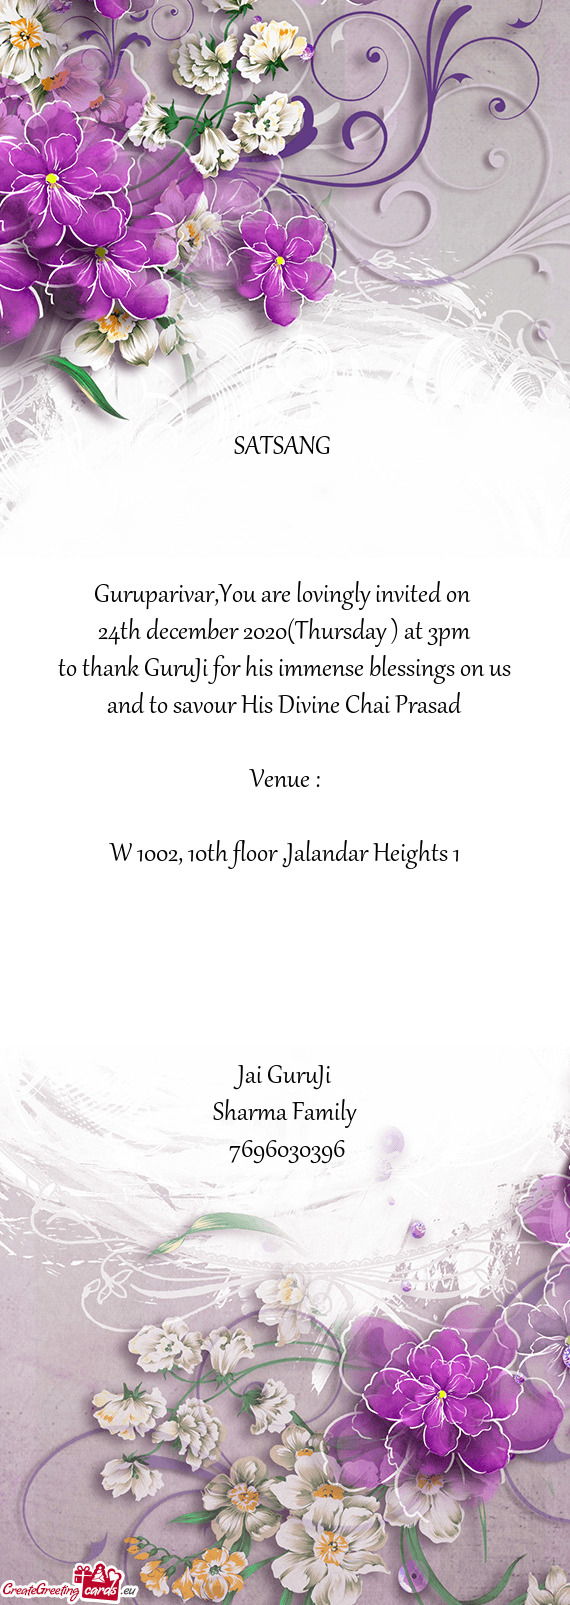 Guruparivar,You are lovingly invited on